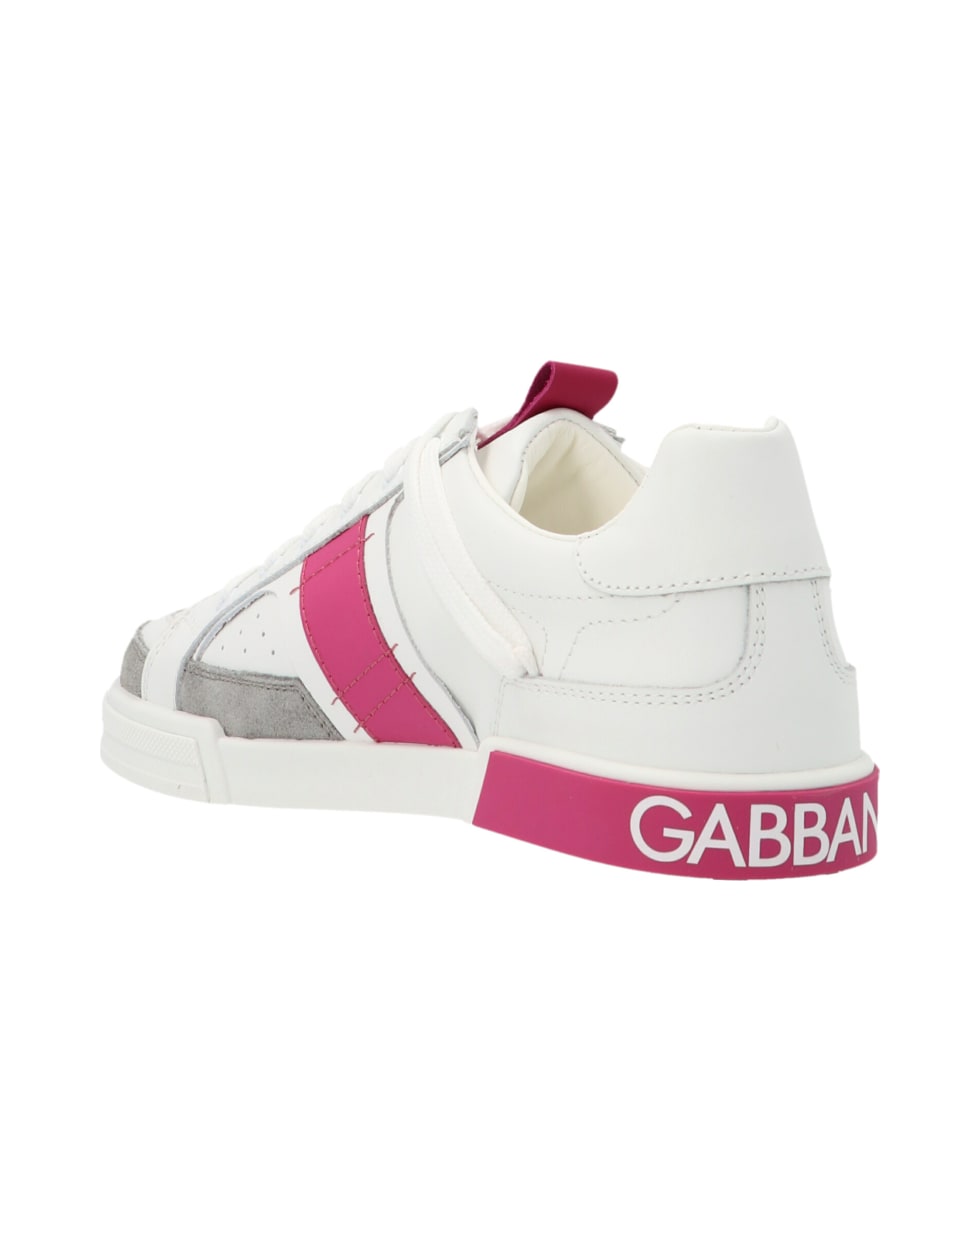 Dolce & Gabbana 'pop' Shoes - White